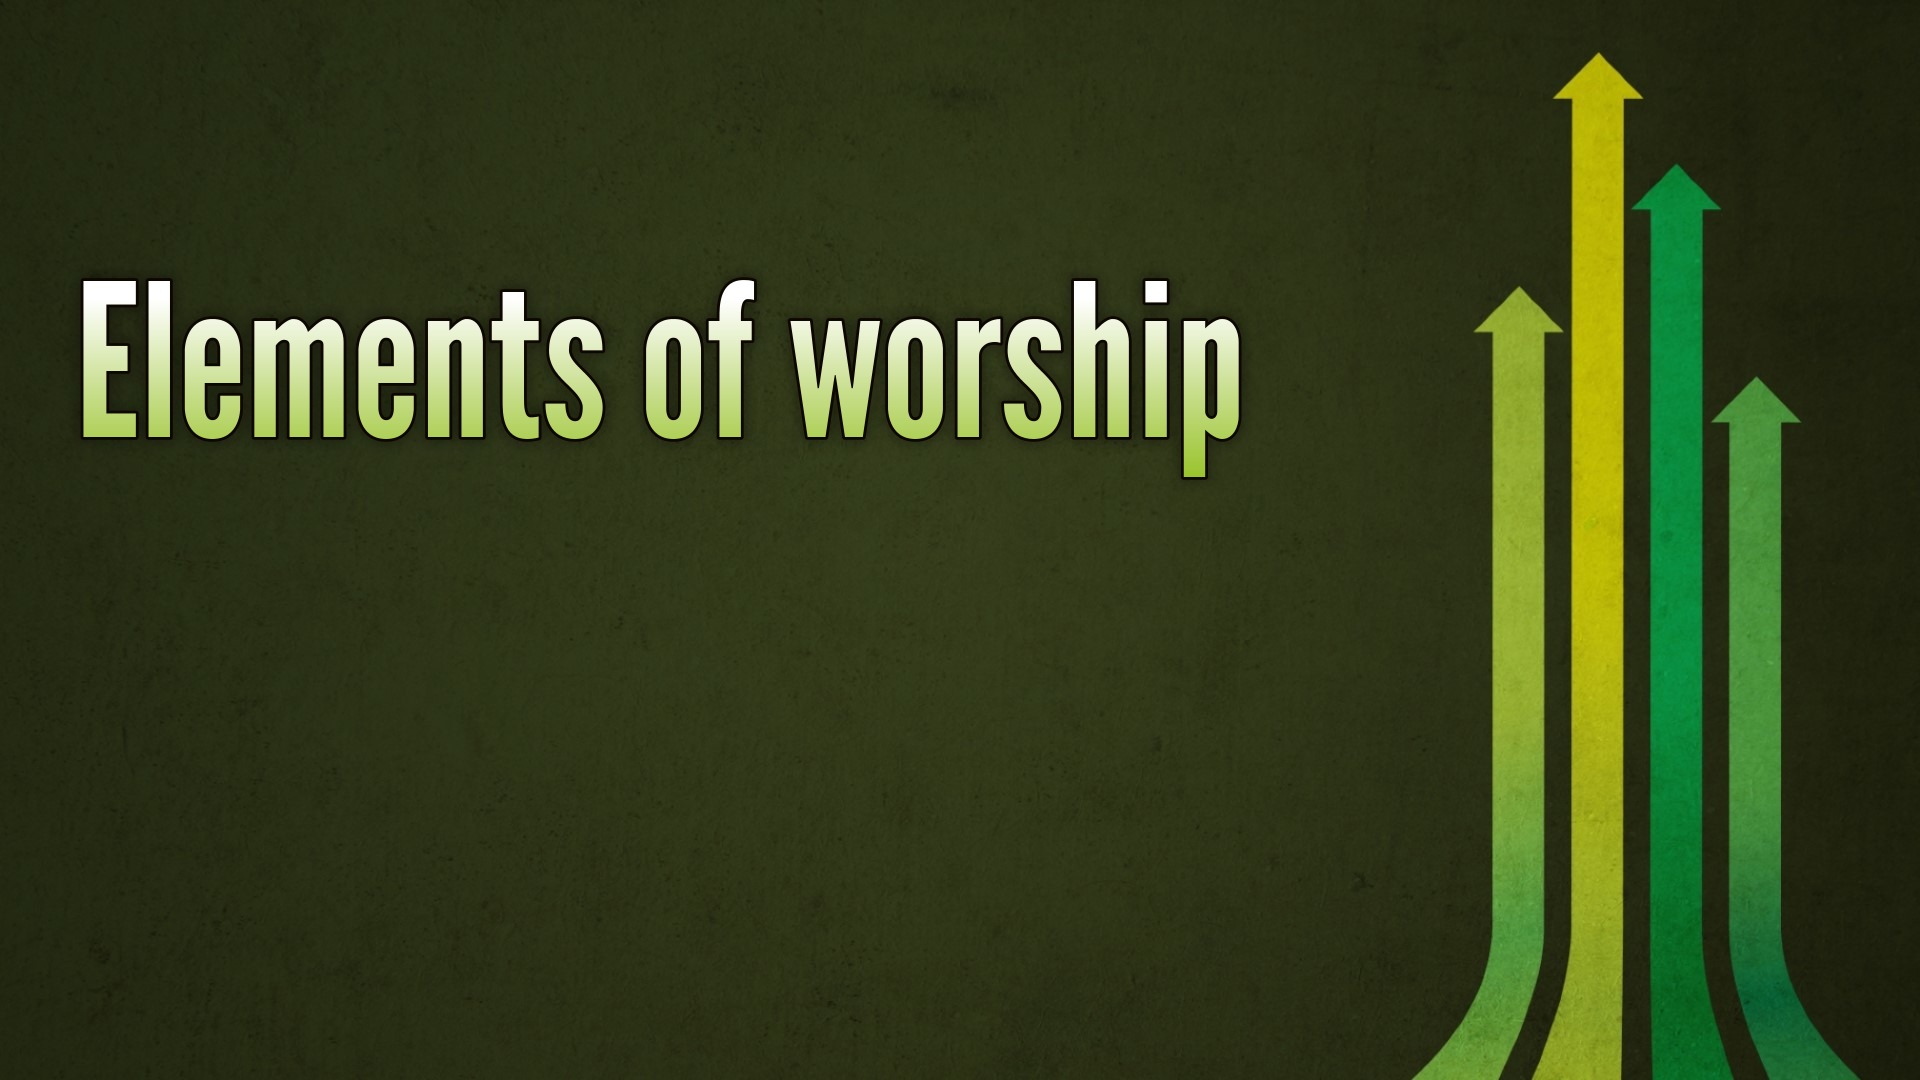 Elements of worship